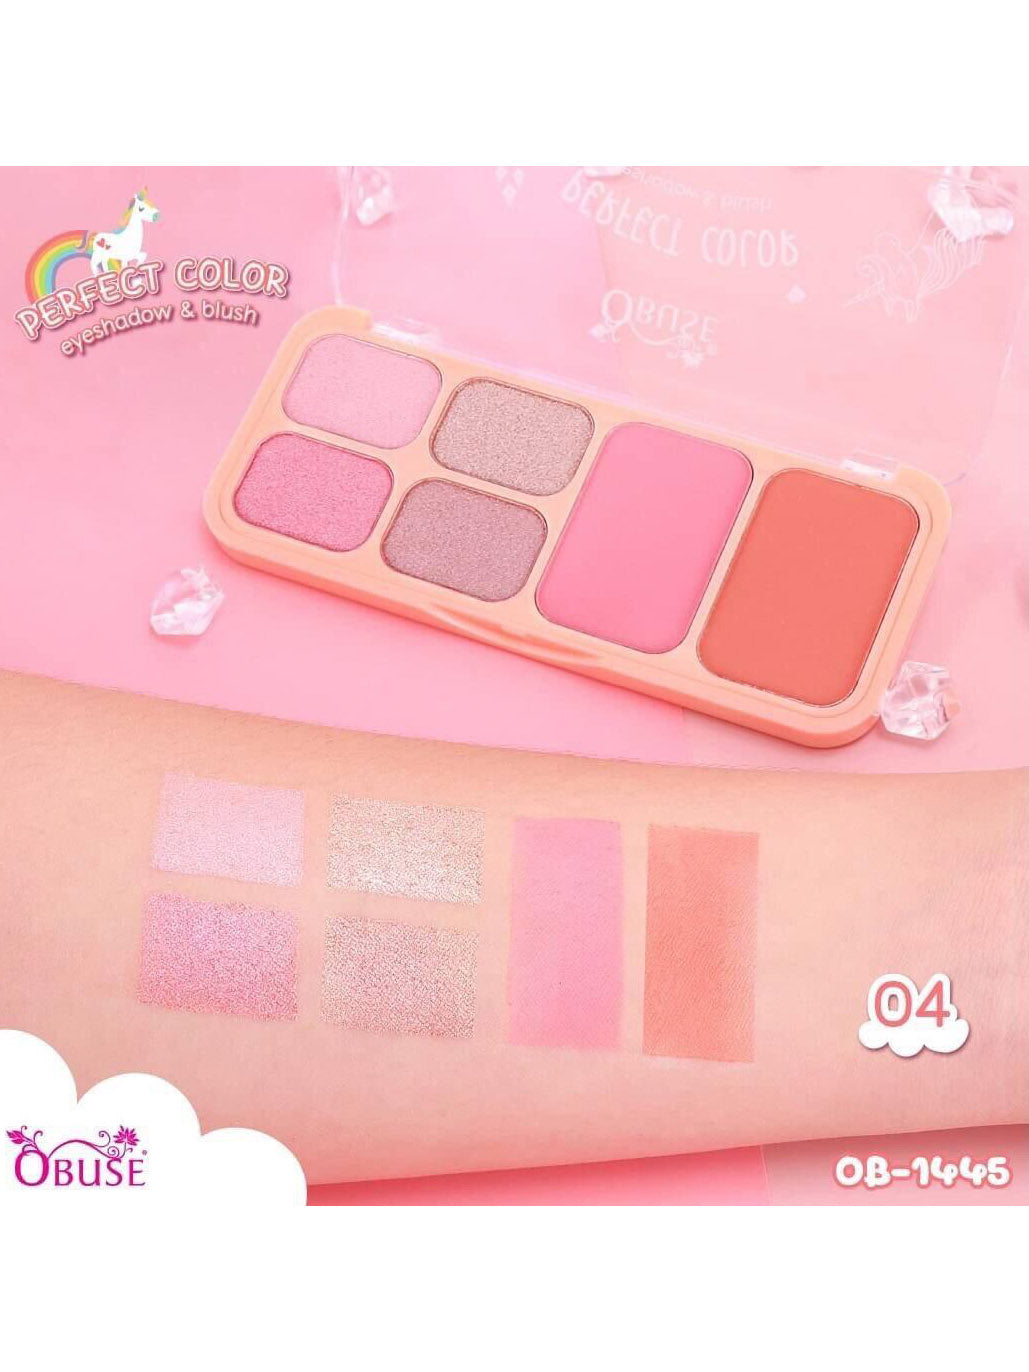 Obuse Perfect Color Eyeshadow & Blush Palette 14.8G OB-1445-04 (Thai)